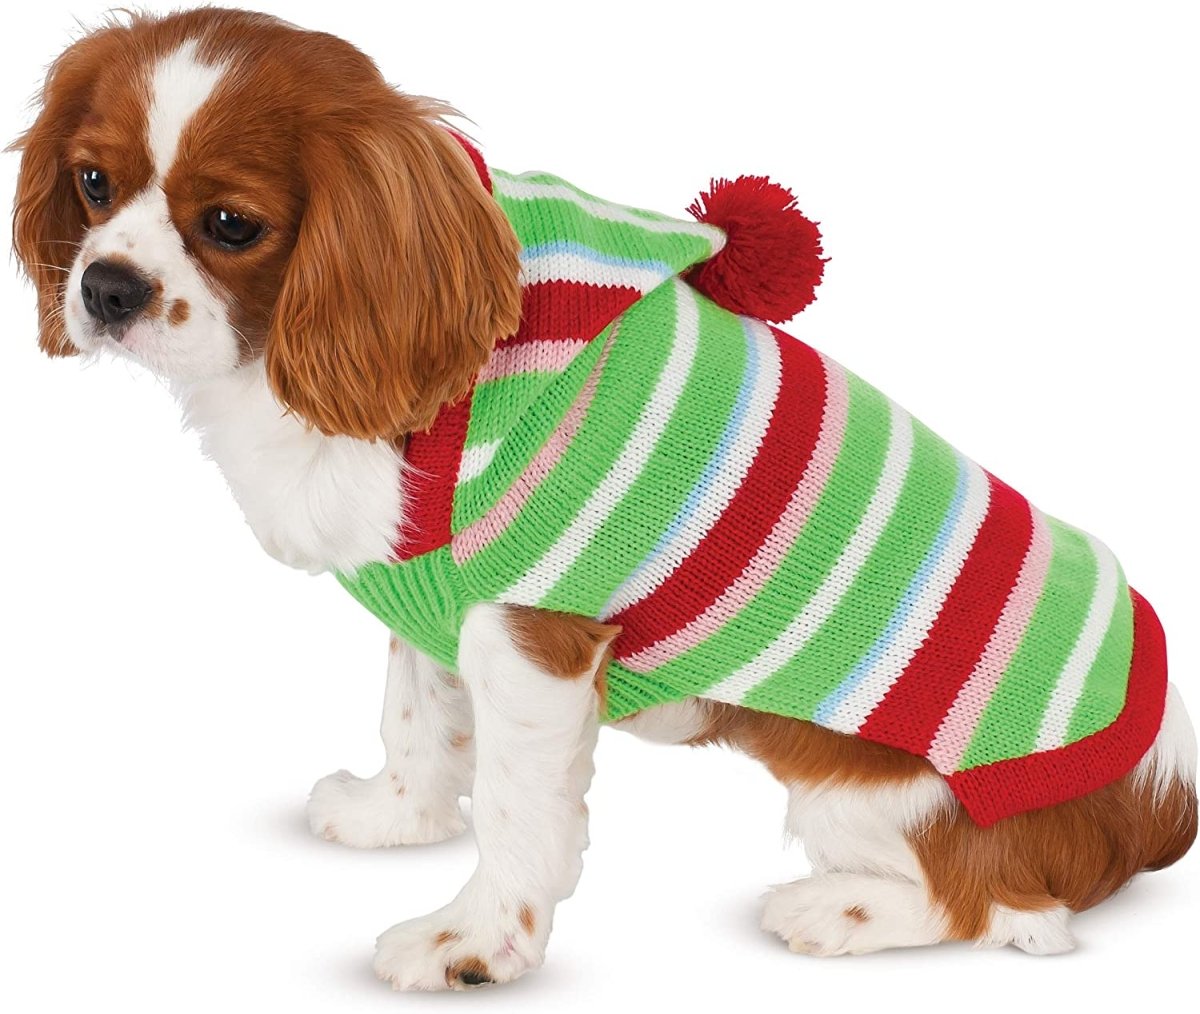 Rubie's Costume Company Candy Striped Knit Pet Sweater - worldclasscostumes